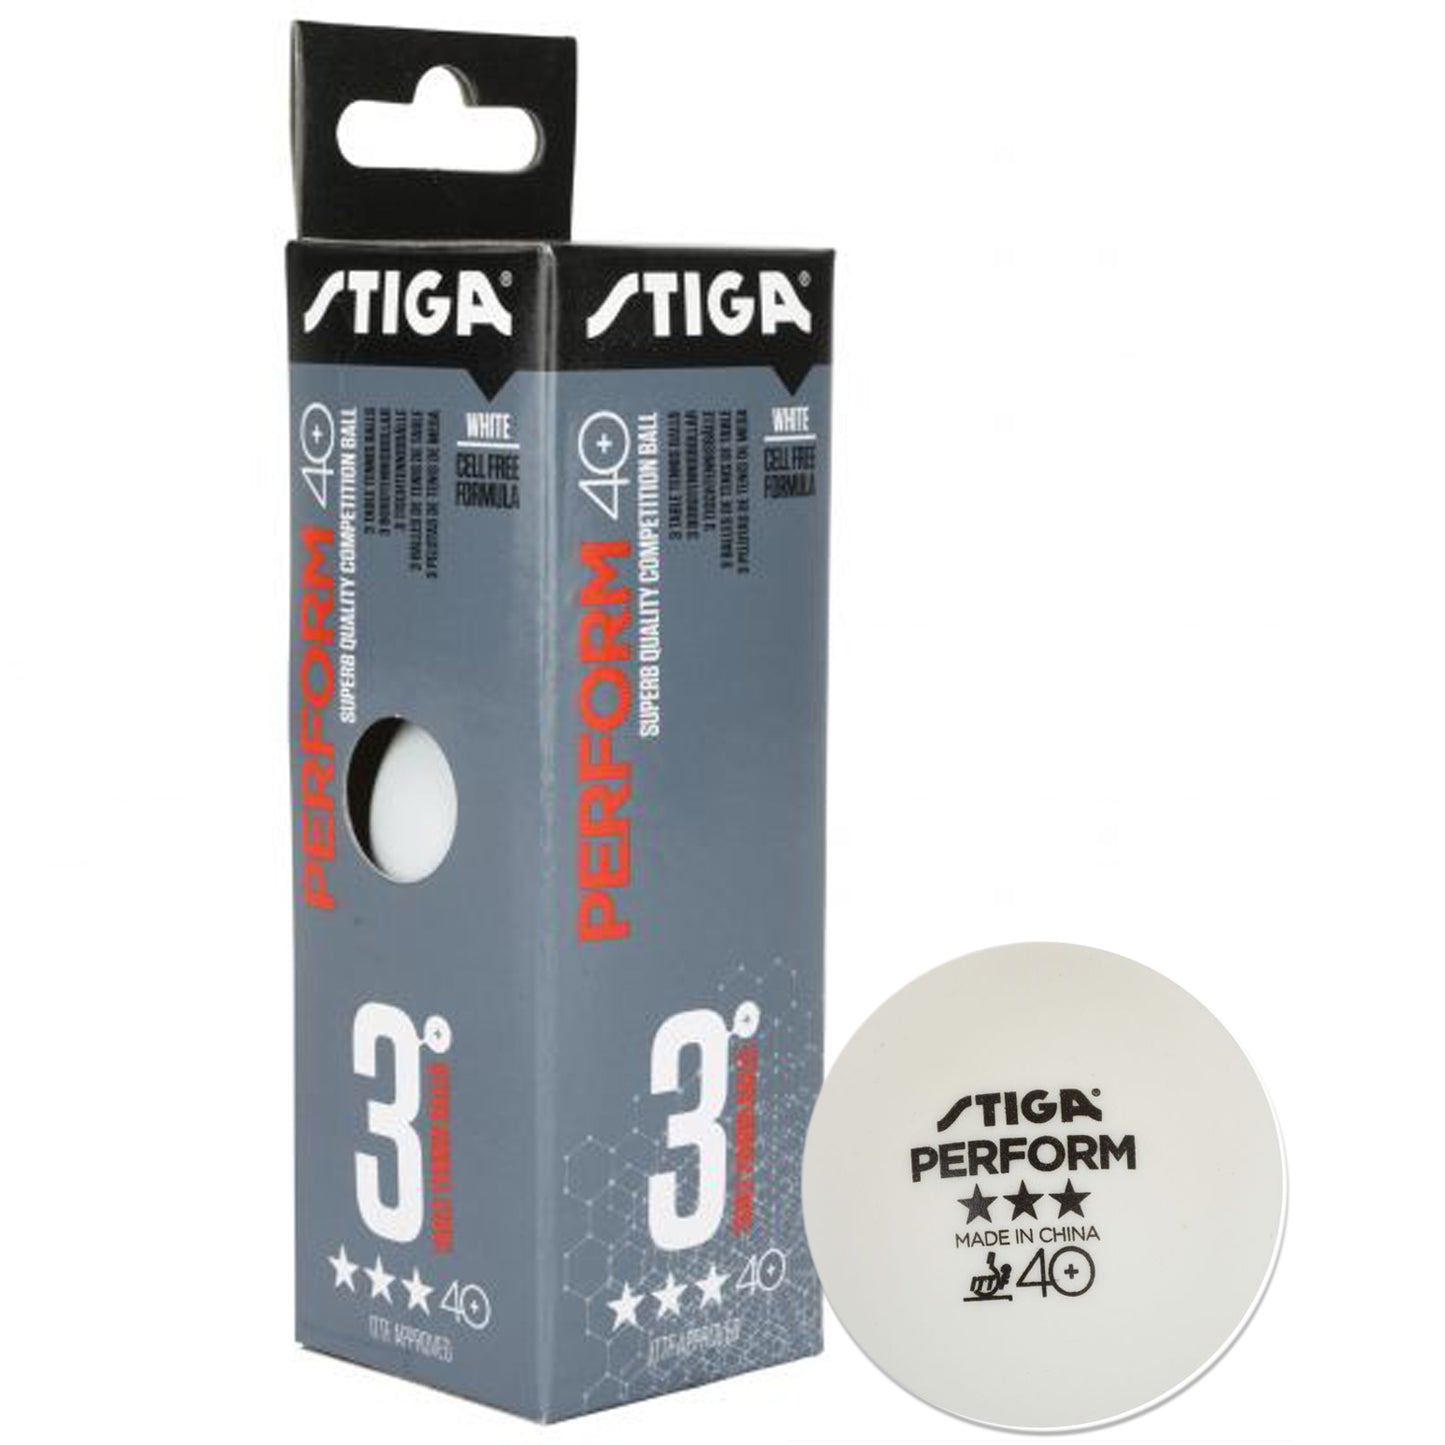 Stiga 32187 Perform 40+Table Tennis Ball Pack of 3 - White - Best Price online Prokicksports.com